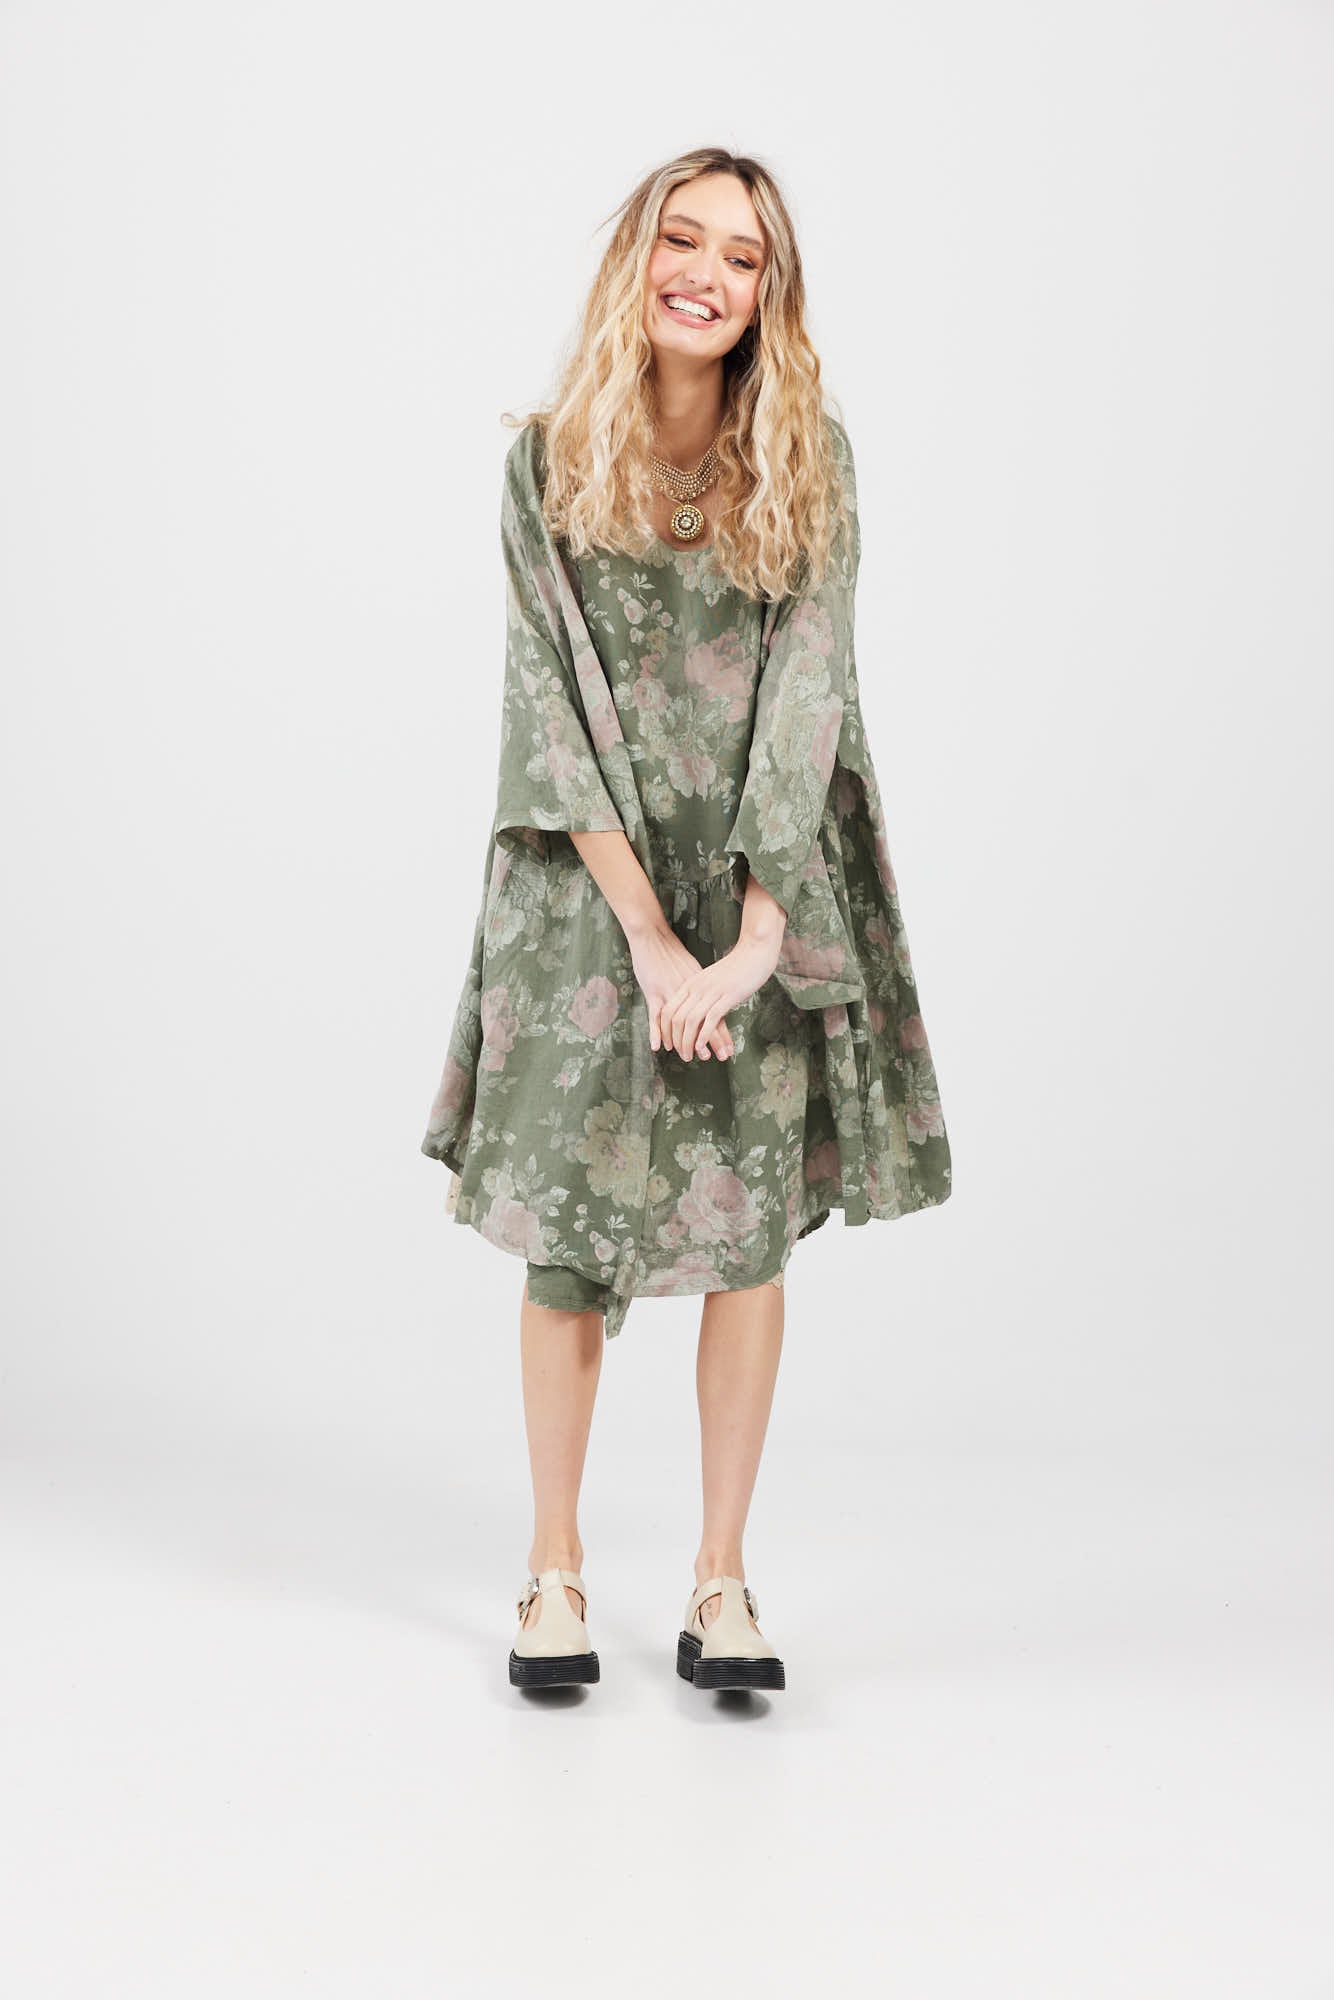 Clarissa Linen dress. Olive Floral